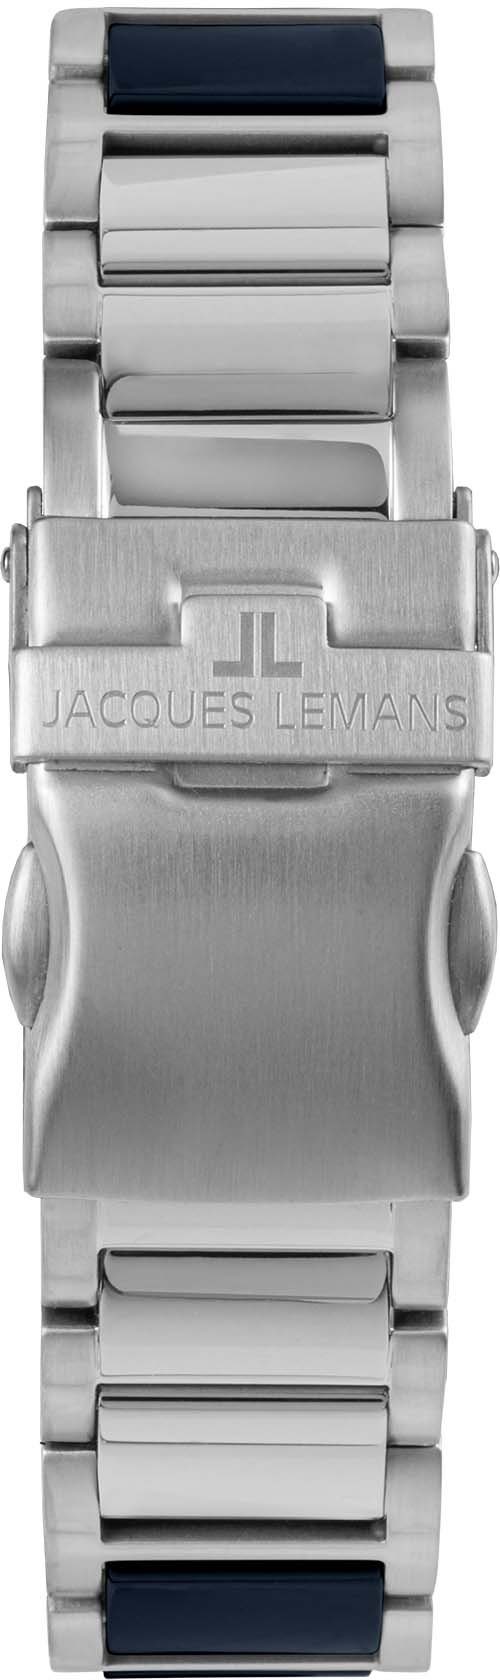 42-10B Jacques Liverpool, Keramikuhr Lemans